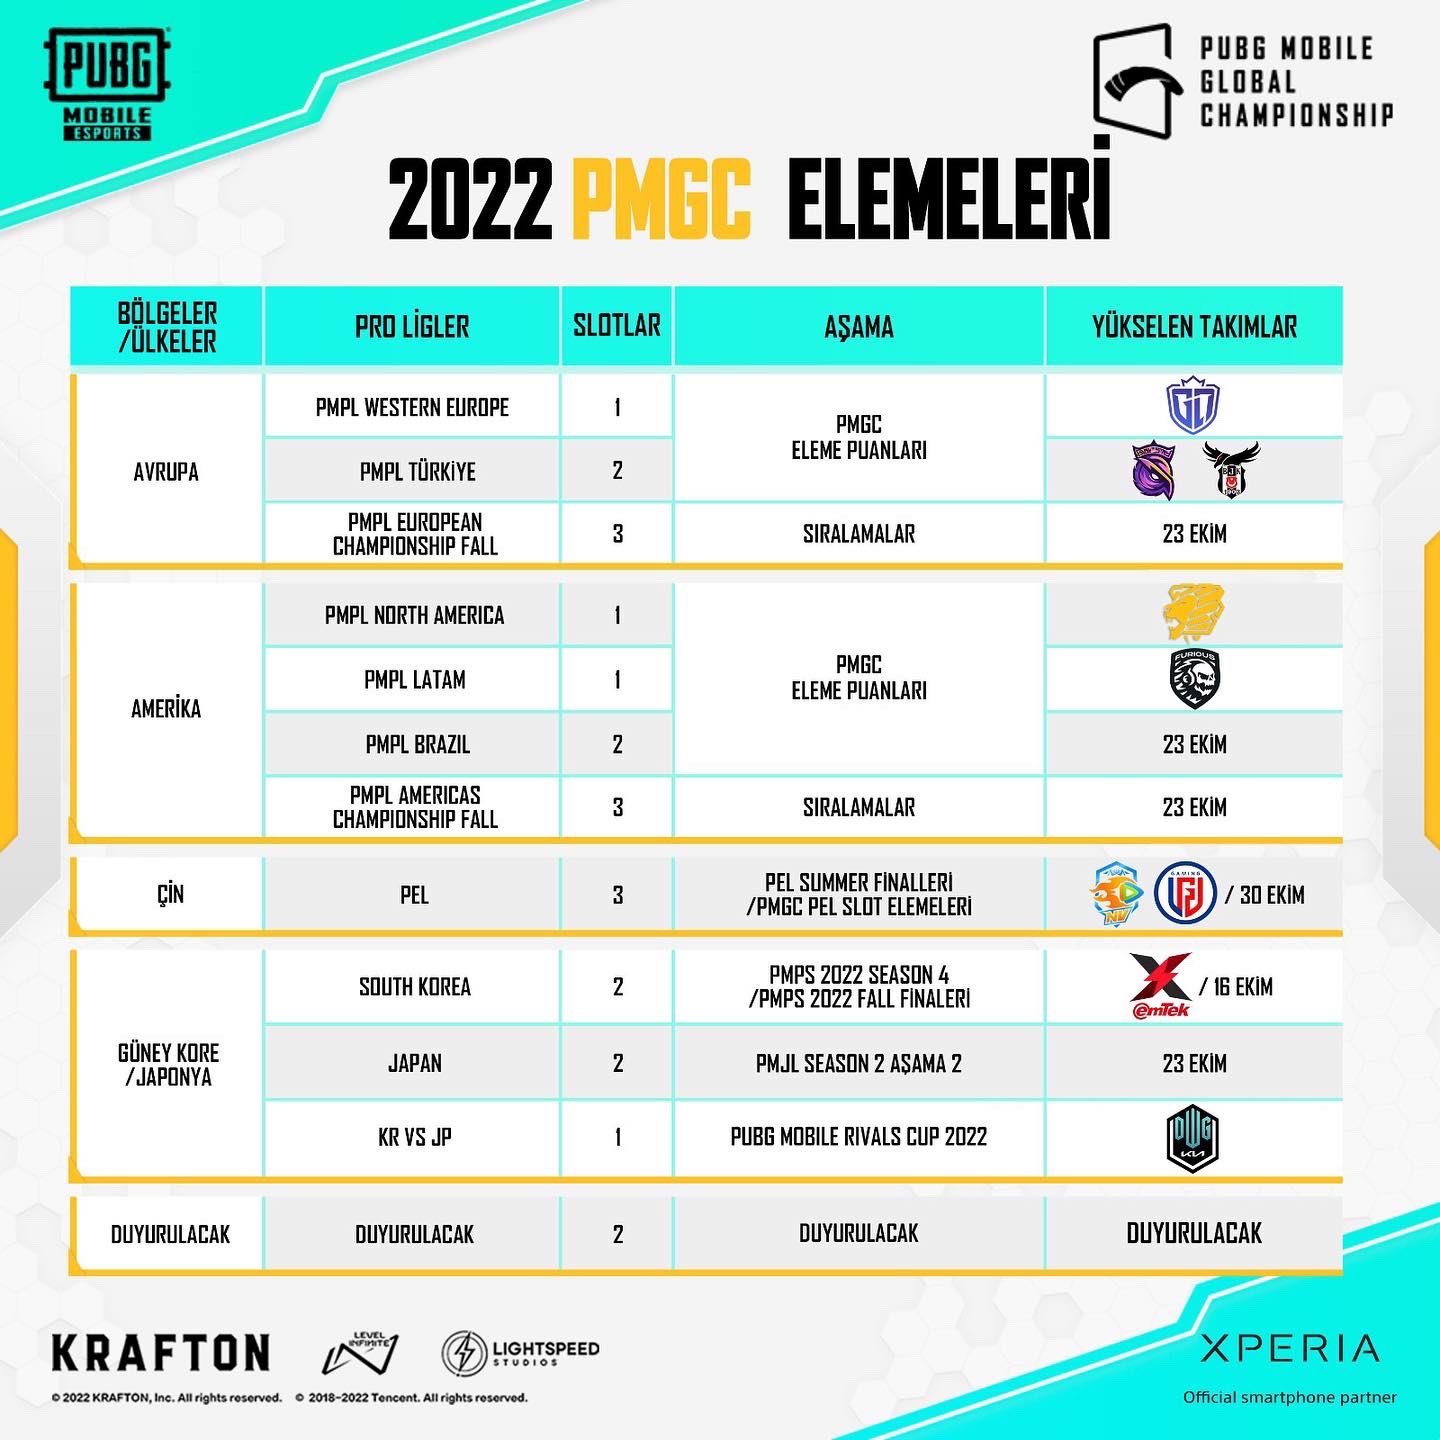 2022 PUBG Mobile Global Championship